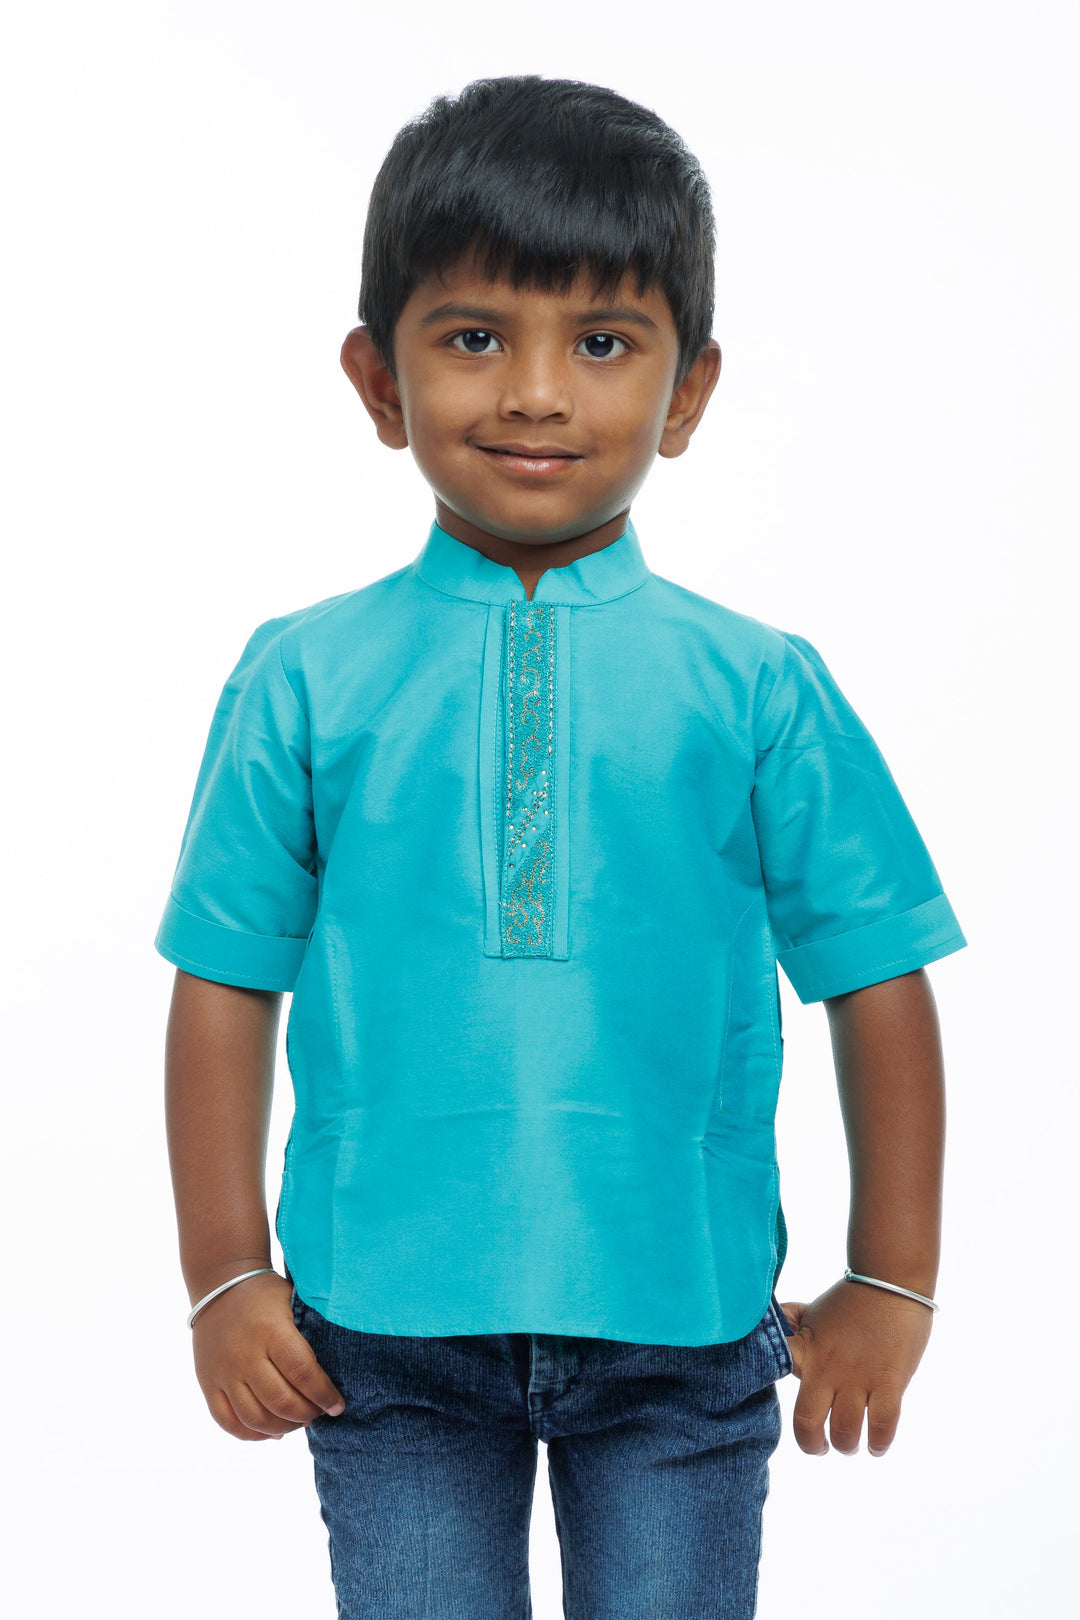 The Nesavu Boys Kurtha Shirt Boys Vibrant Teal Kurta Shirt - Traditional Elegance with a Modern Twist Nesavu 16 (1Y) / Blue / Blend Silk BS137B-16 Teal Boys Kurta Shirt | Sequin Detail | Comfortable Traditional Wear | The Nesavu